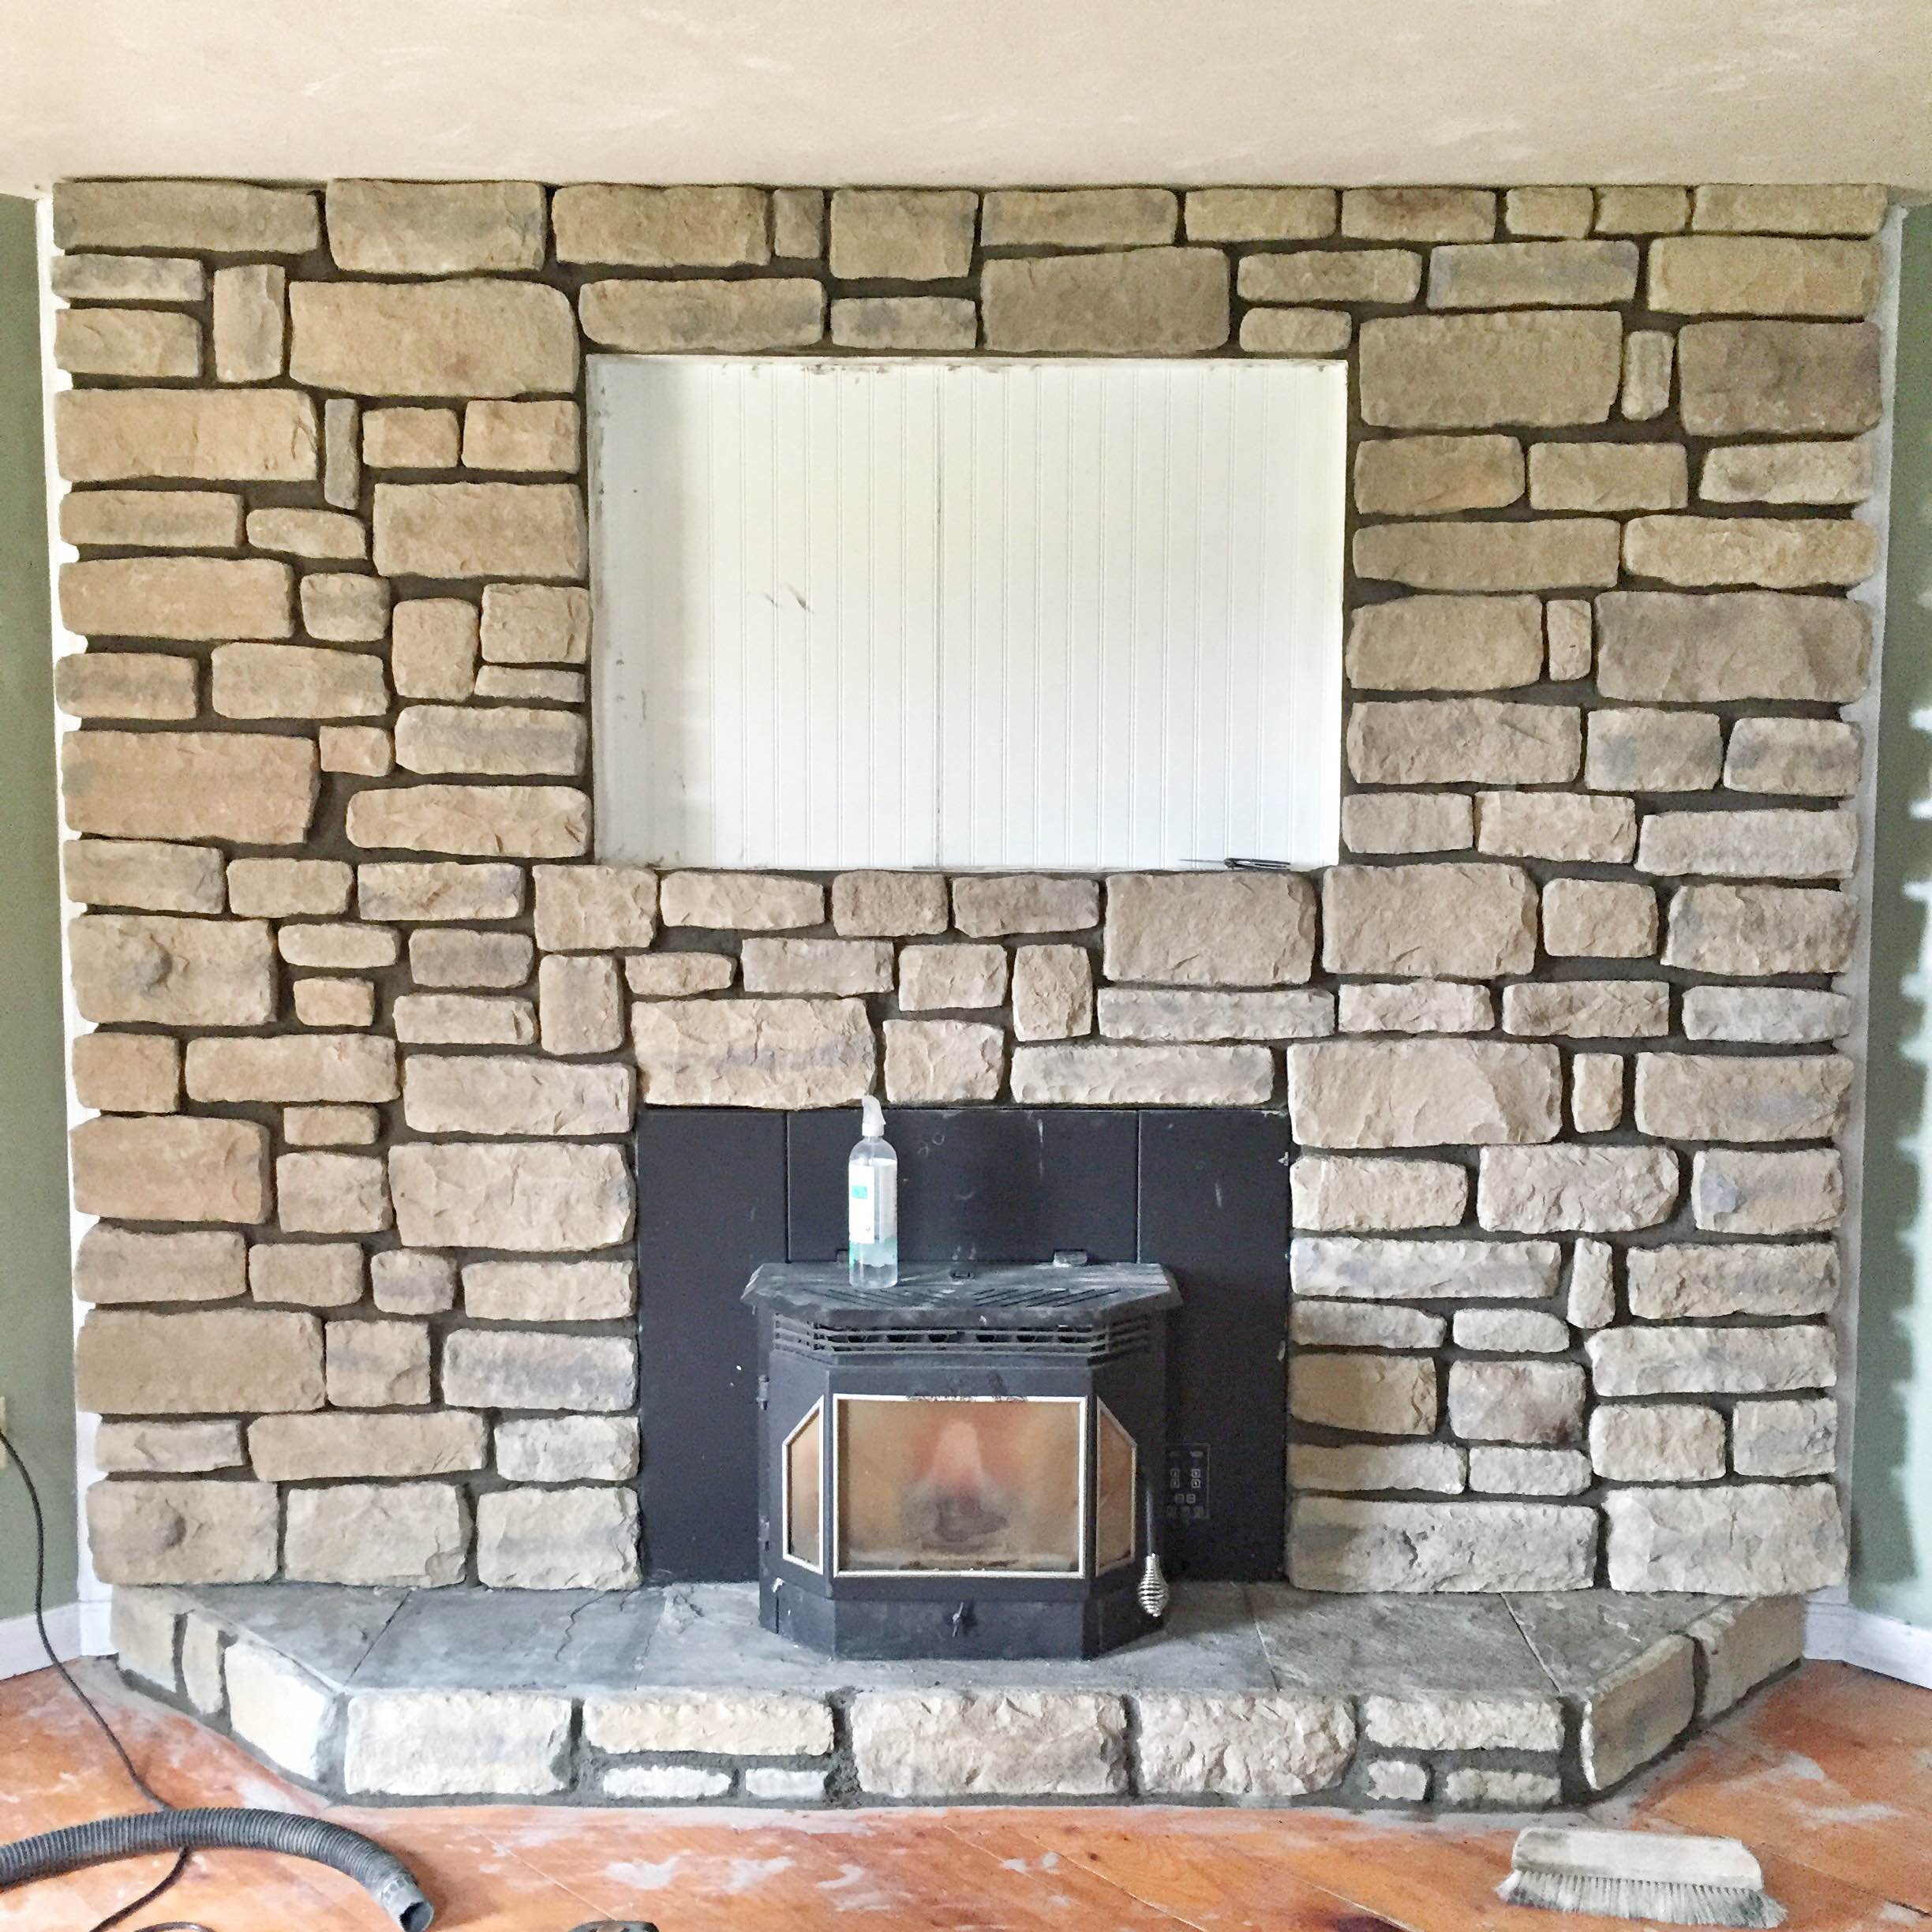 Brick fireplace makeover | Brick to stone veneer fireplace makeover | How to do a stone veneer fire place | GinaKirk.com